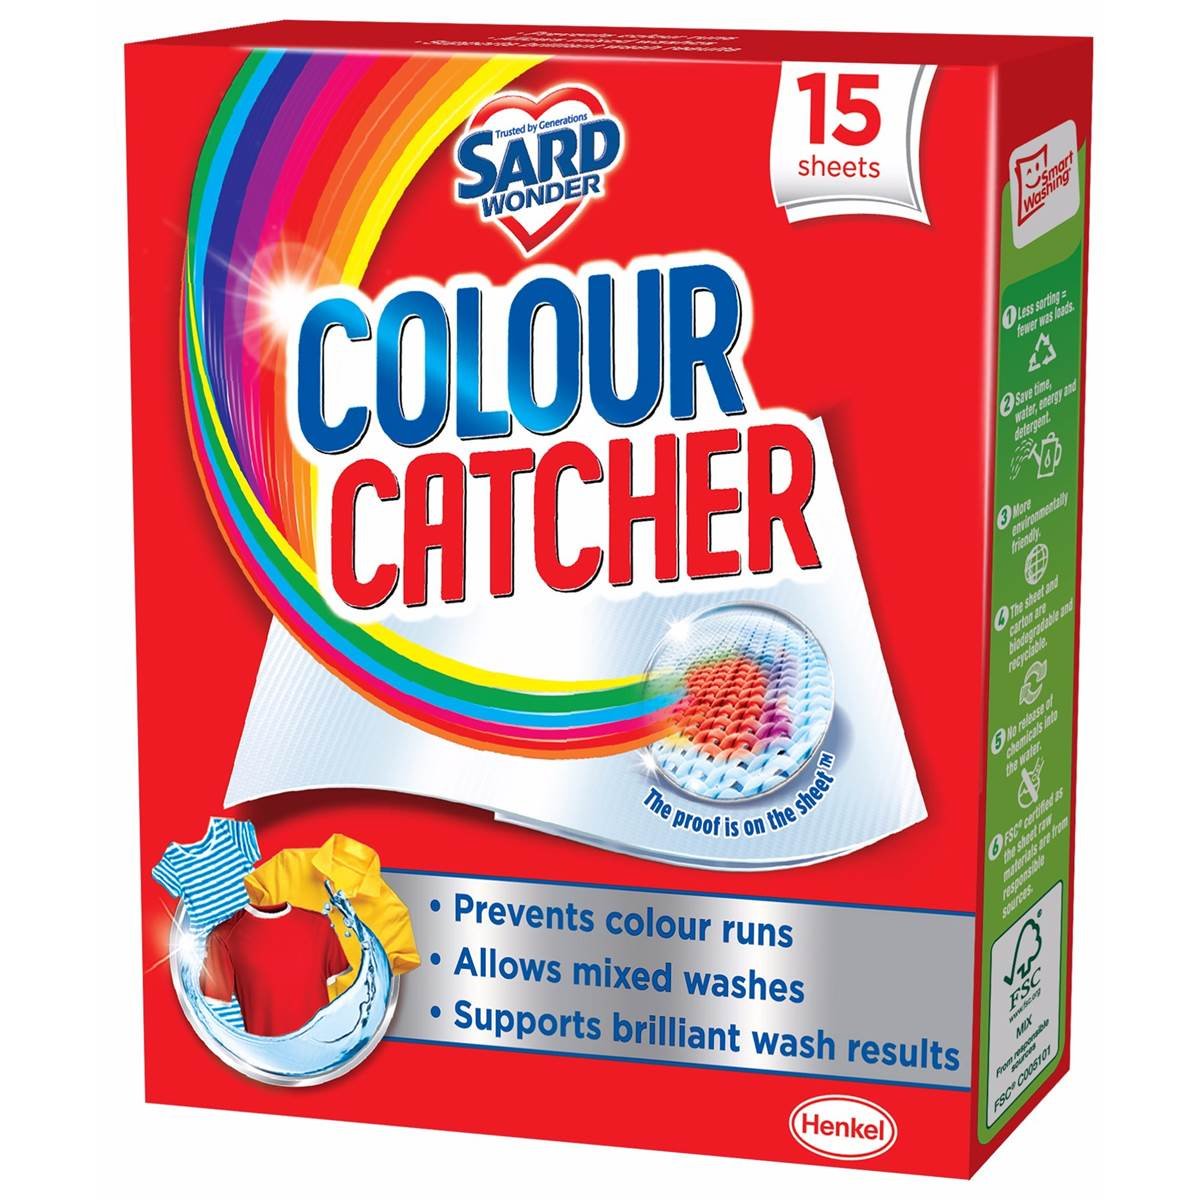 Sard Wonder Colour Catcher 15 Sheets